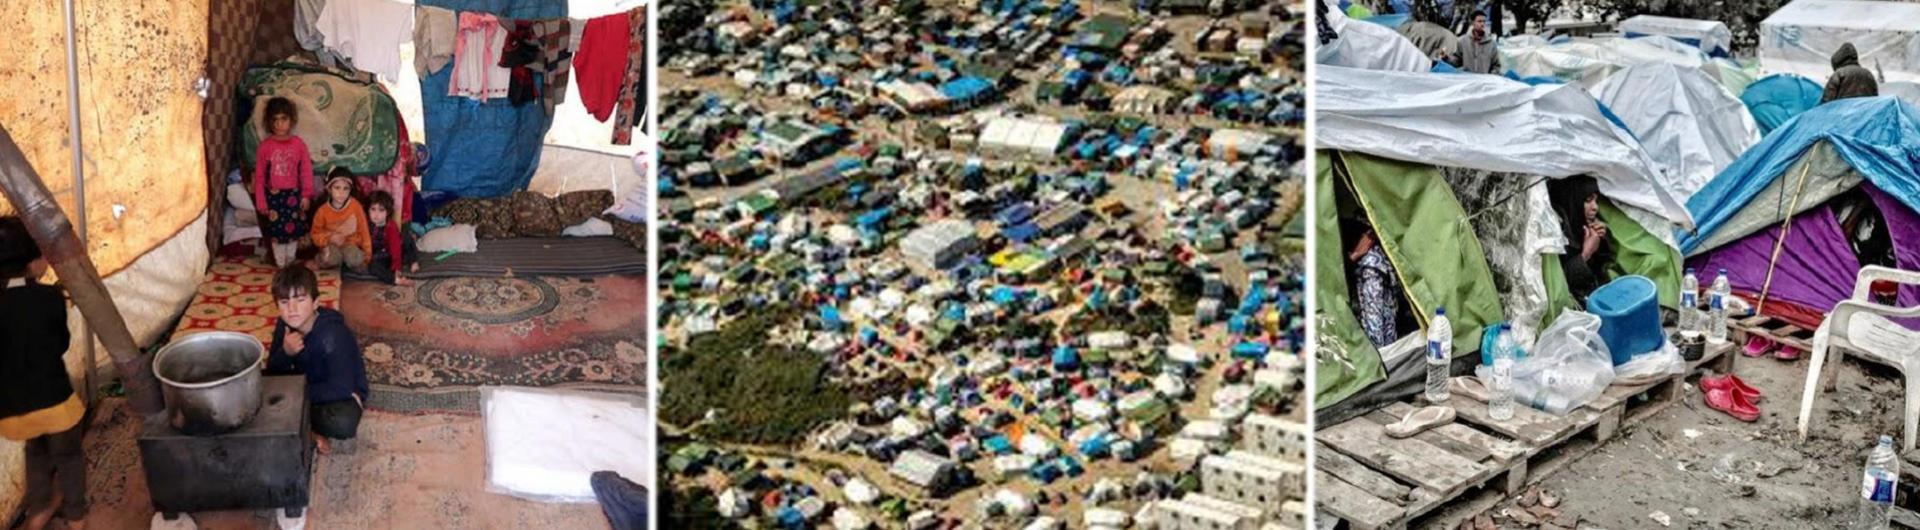 Refugee camps spread